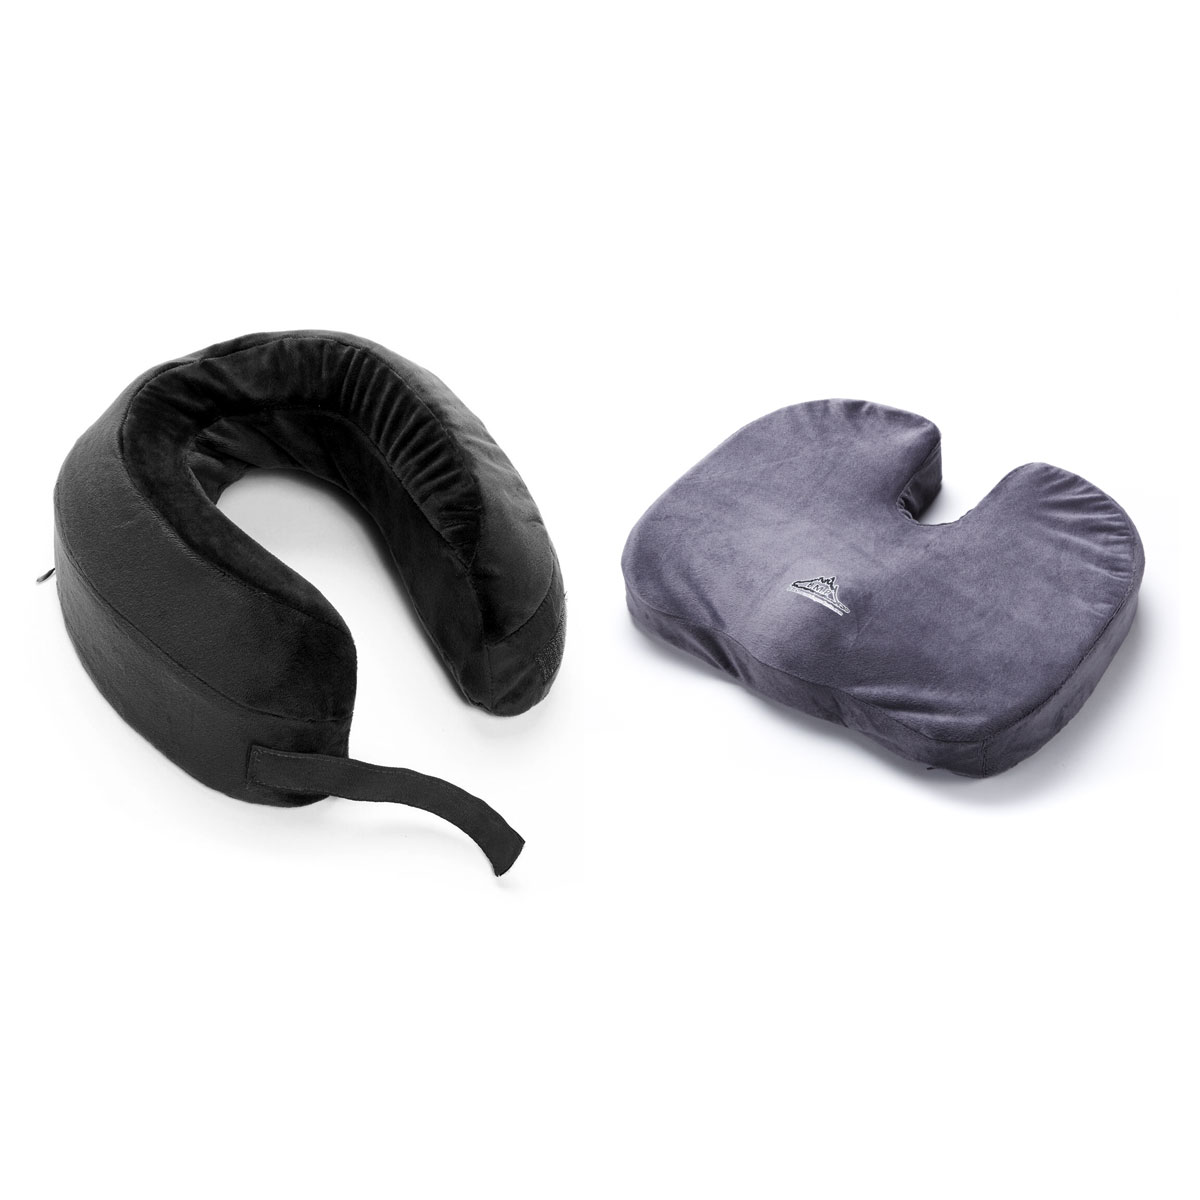 https://blackmountainproducts.com/wp-content/uploads/2018/11/Black-Pillow-Gray-Seat.jpg